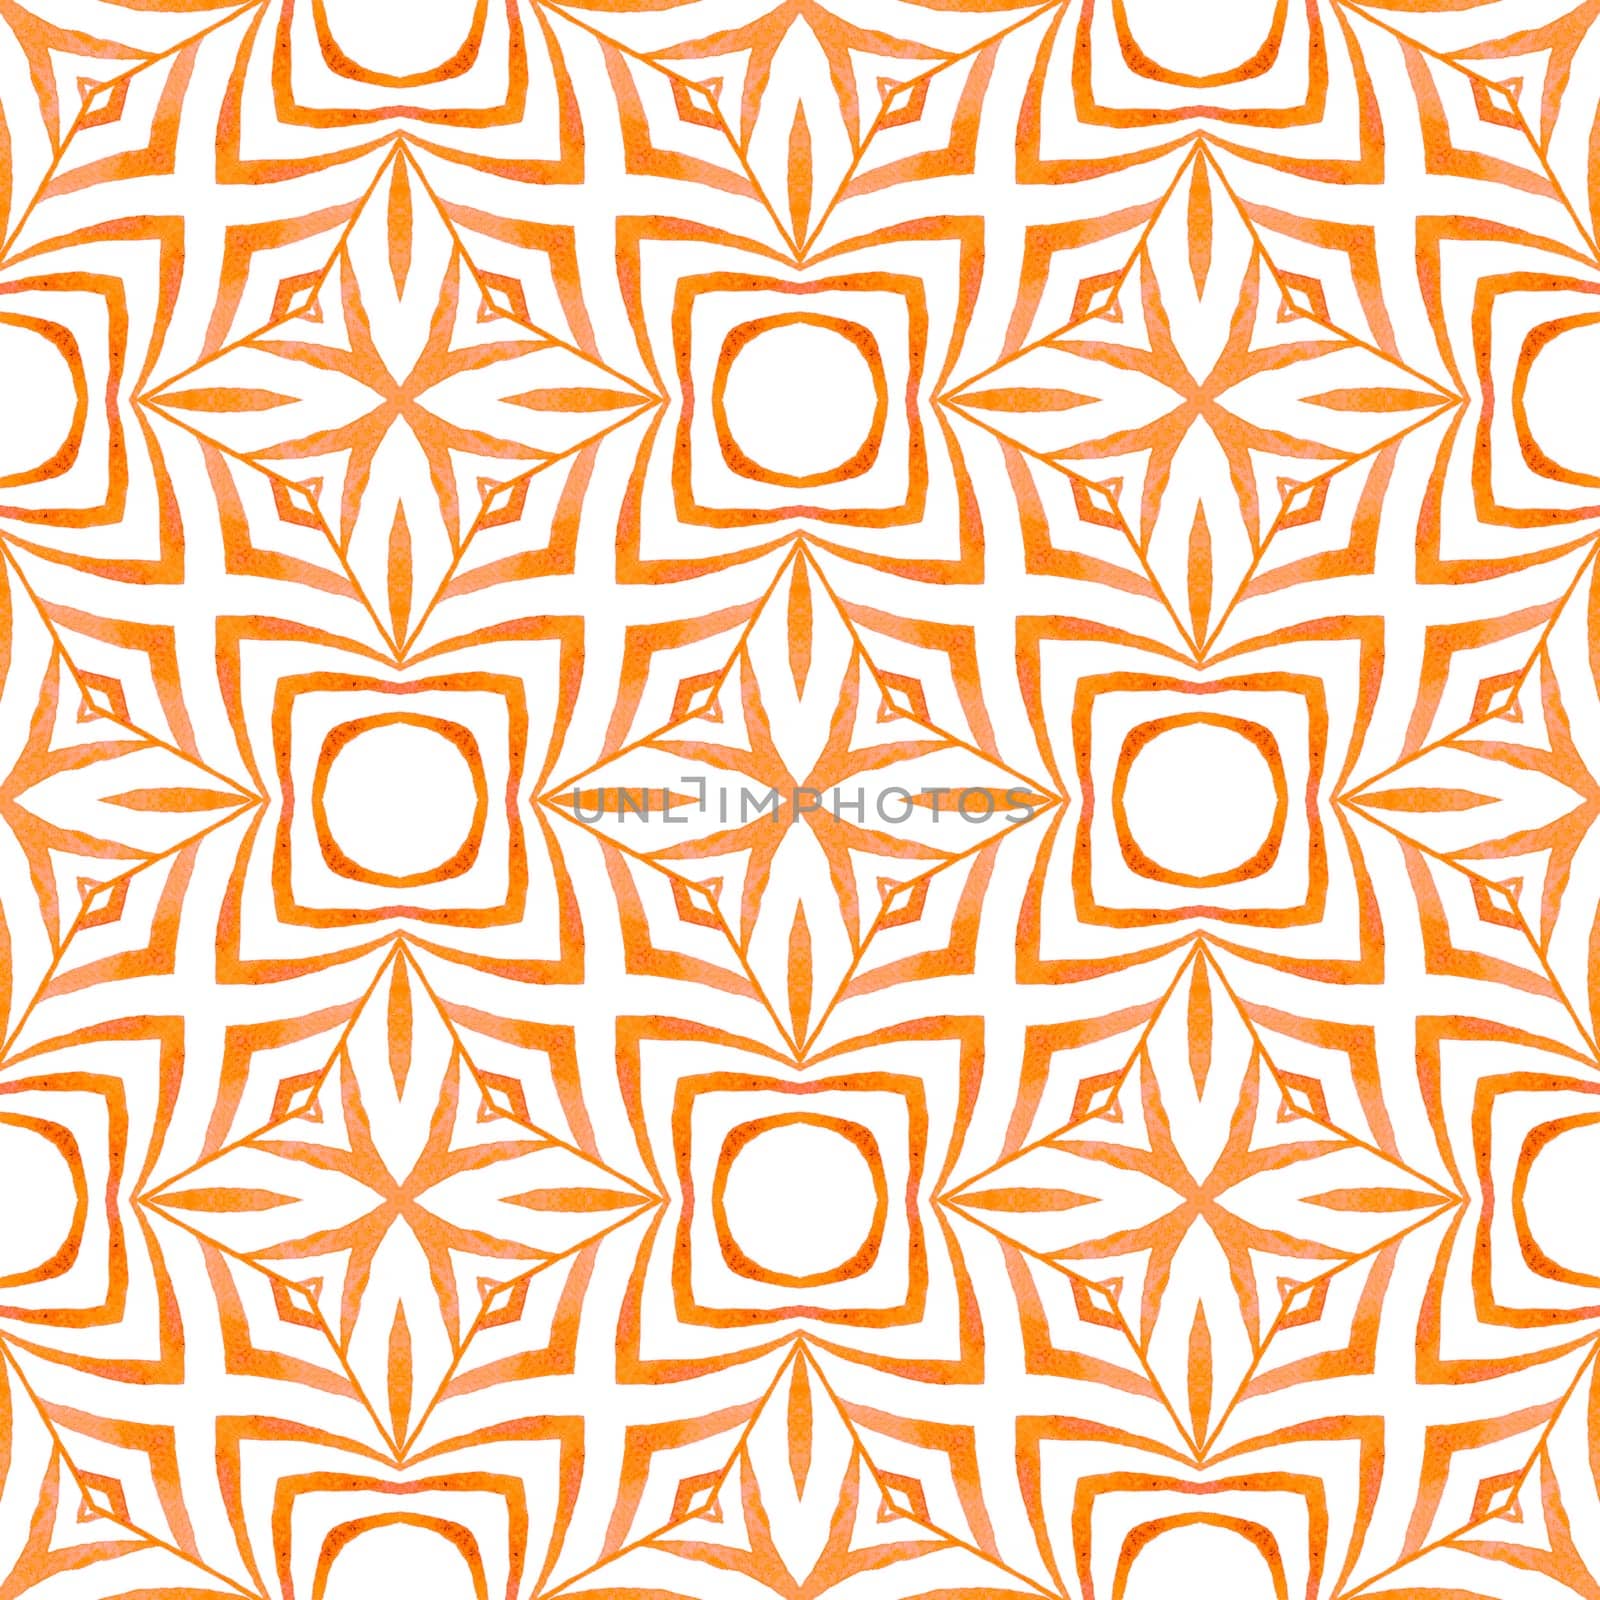 Tiled watercolor background. Orange incredible by beginagain